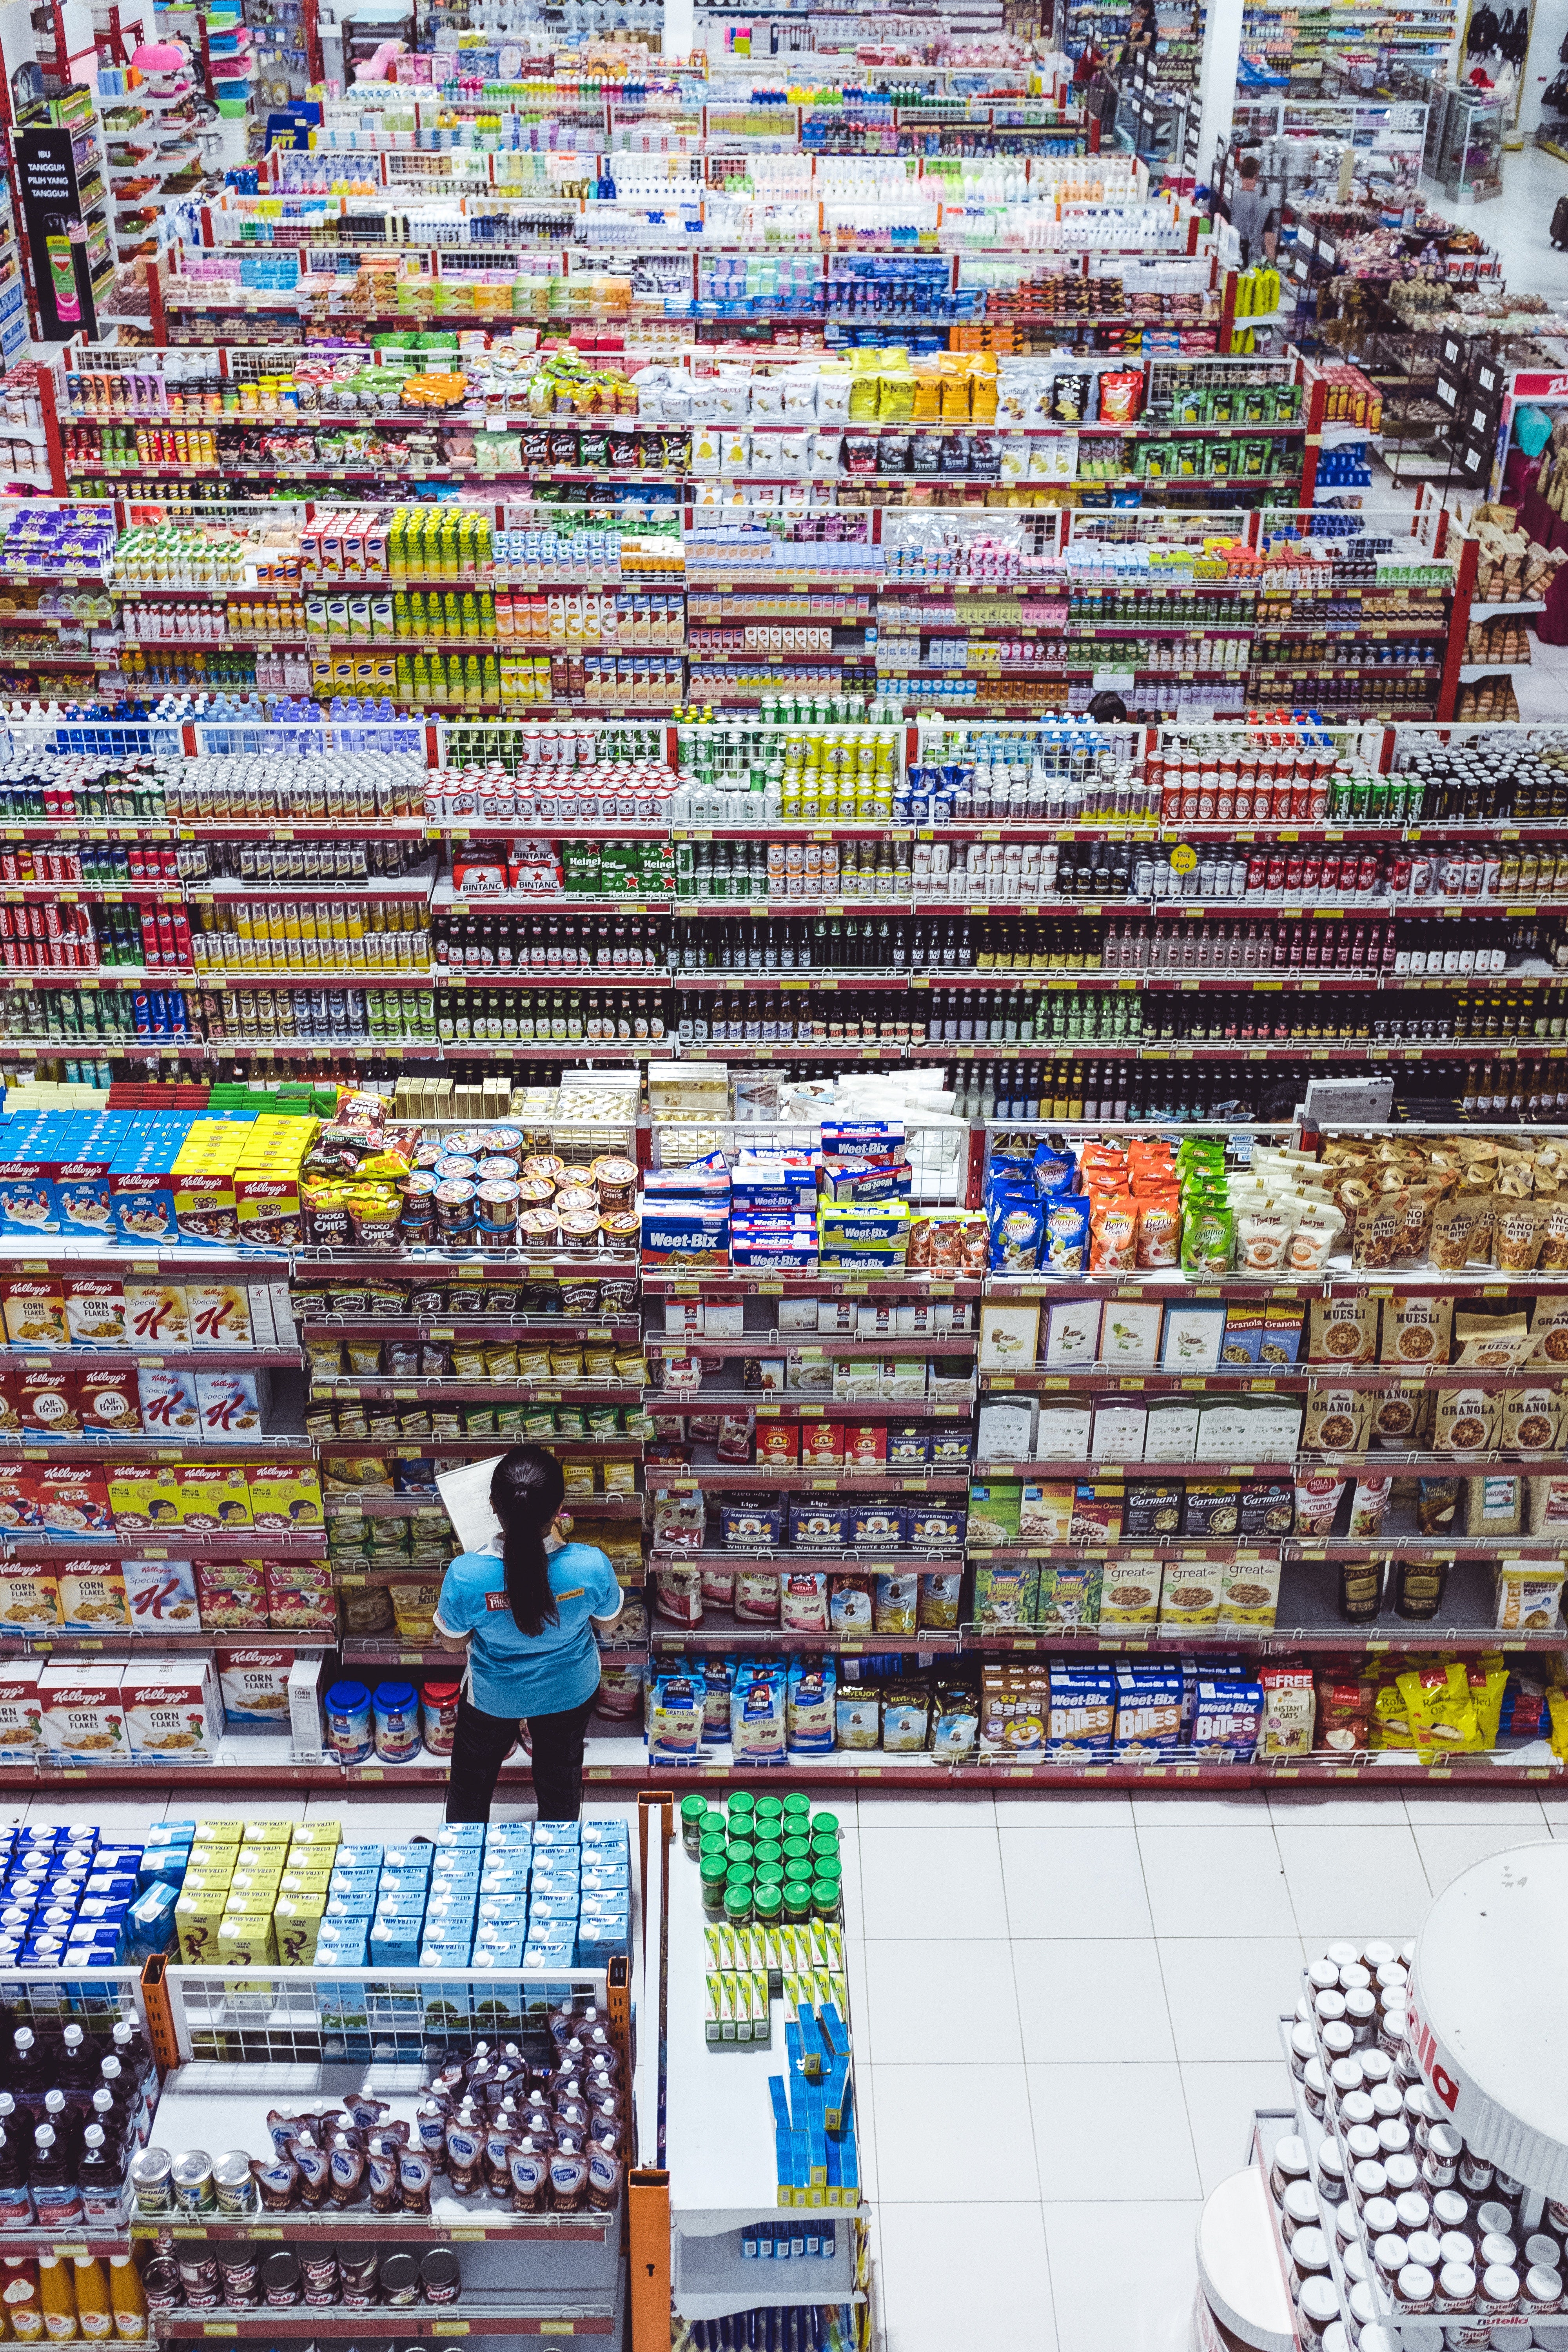 Retail Intelligence Company Trax Raises $125 Million, Brings Cameras to Supermarket Shelves